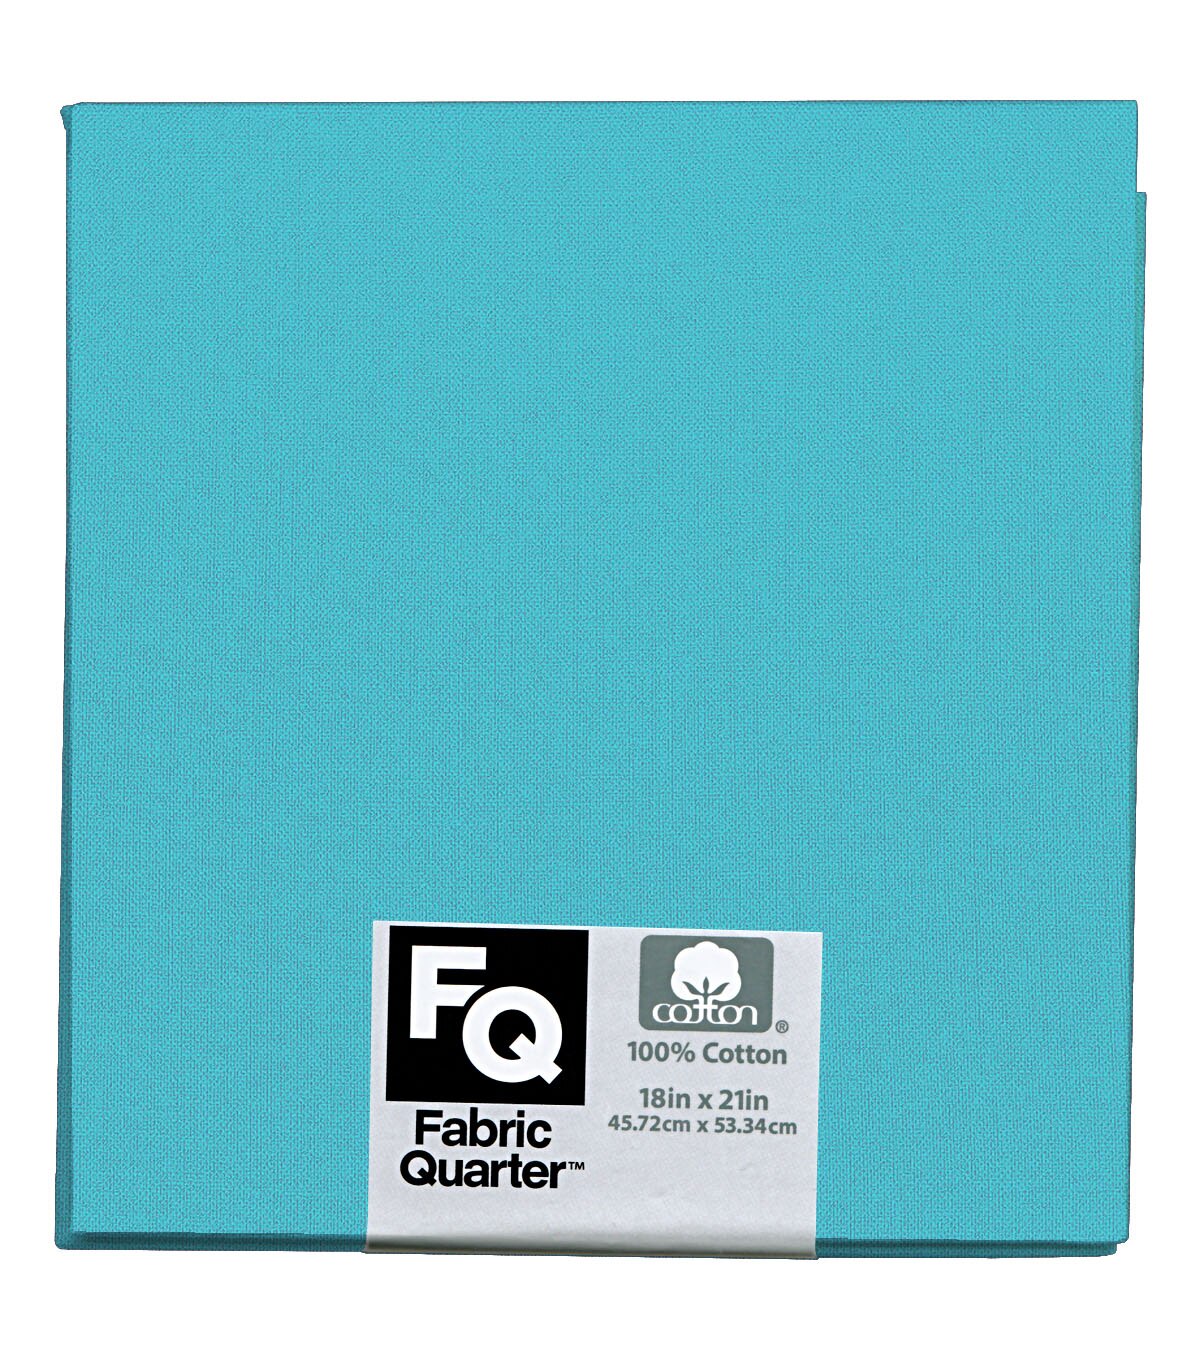 Turquoise 1 Piece Cotton Fabric Quarter | JOANN